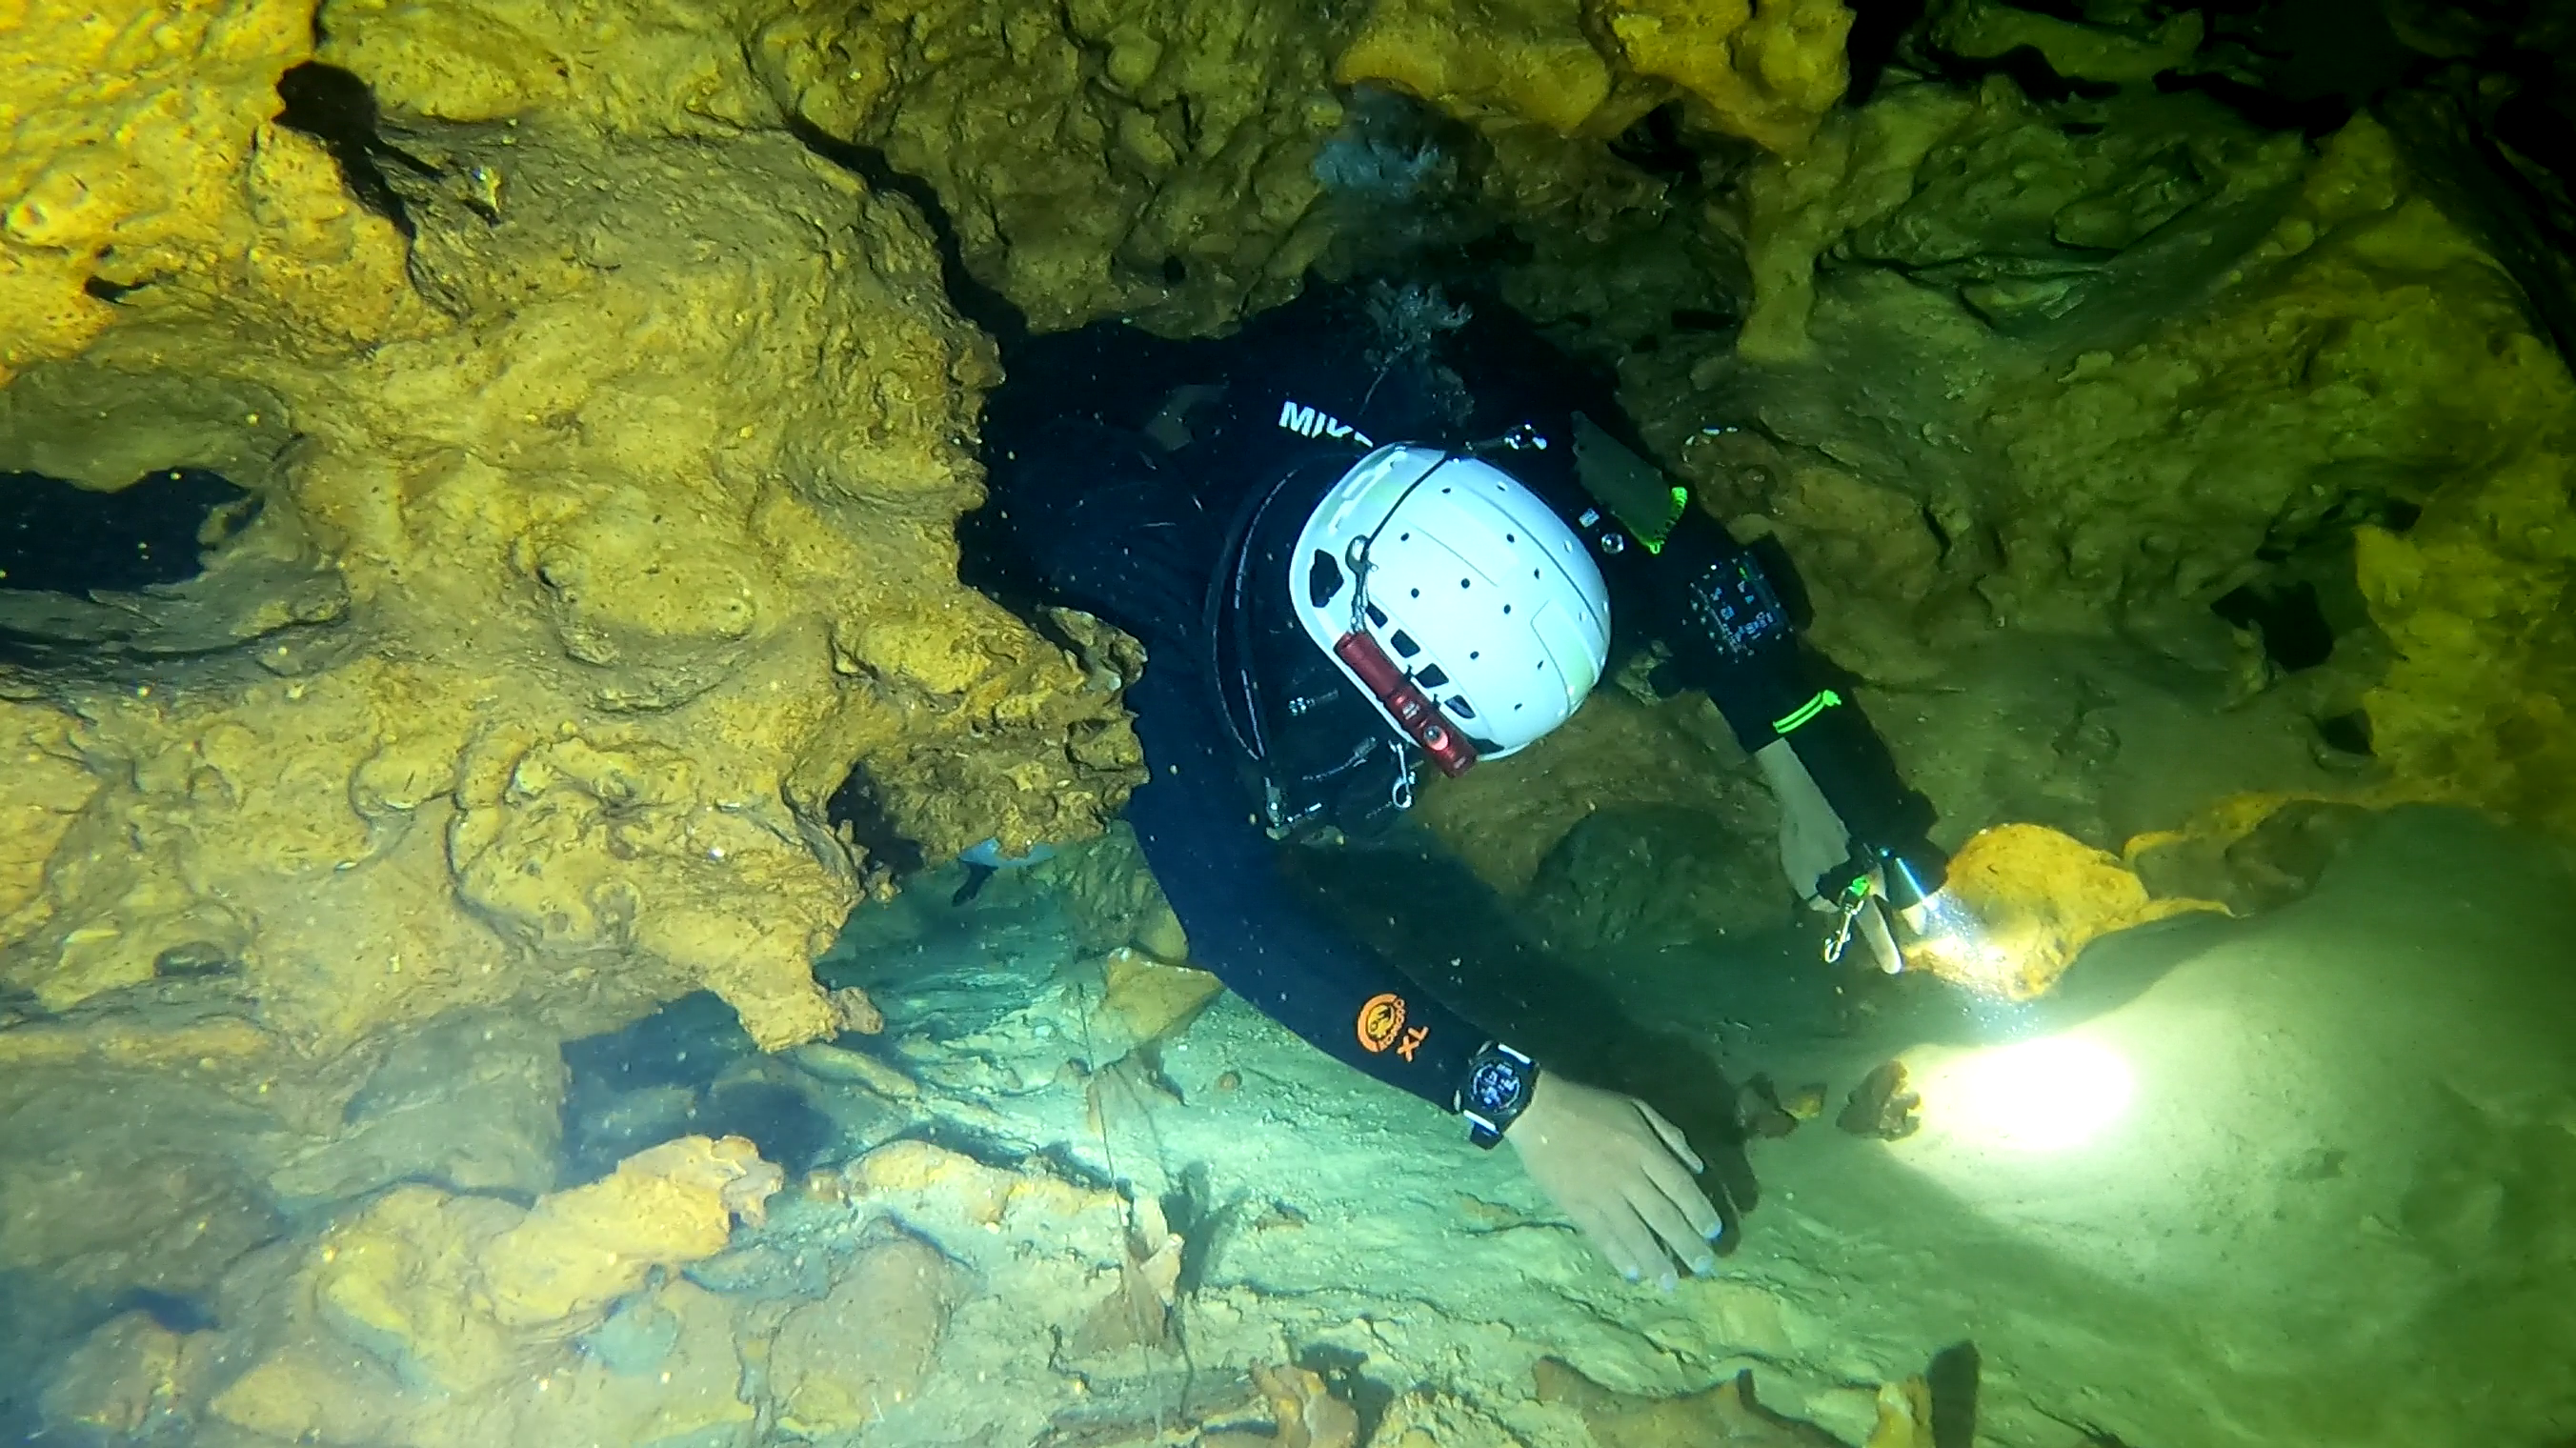 Cave diving restriction